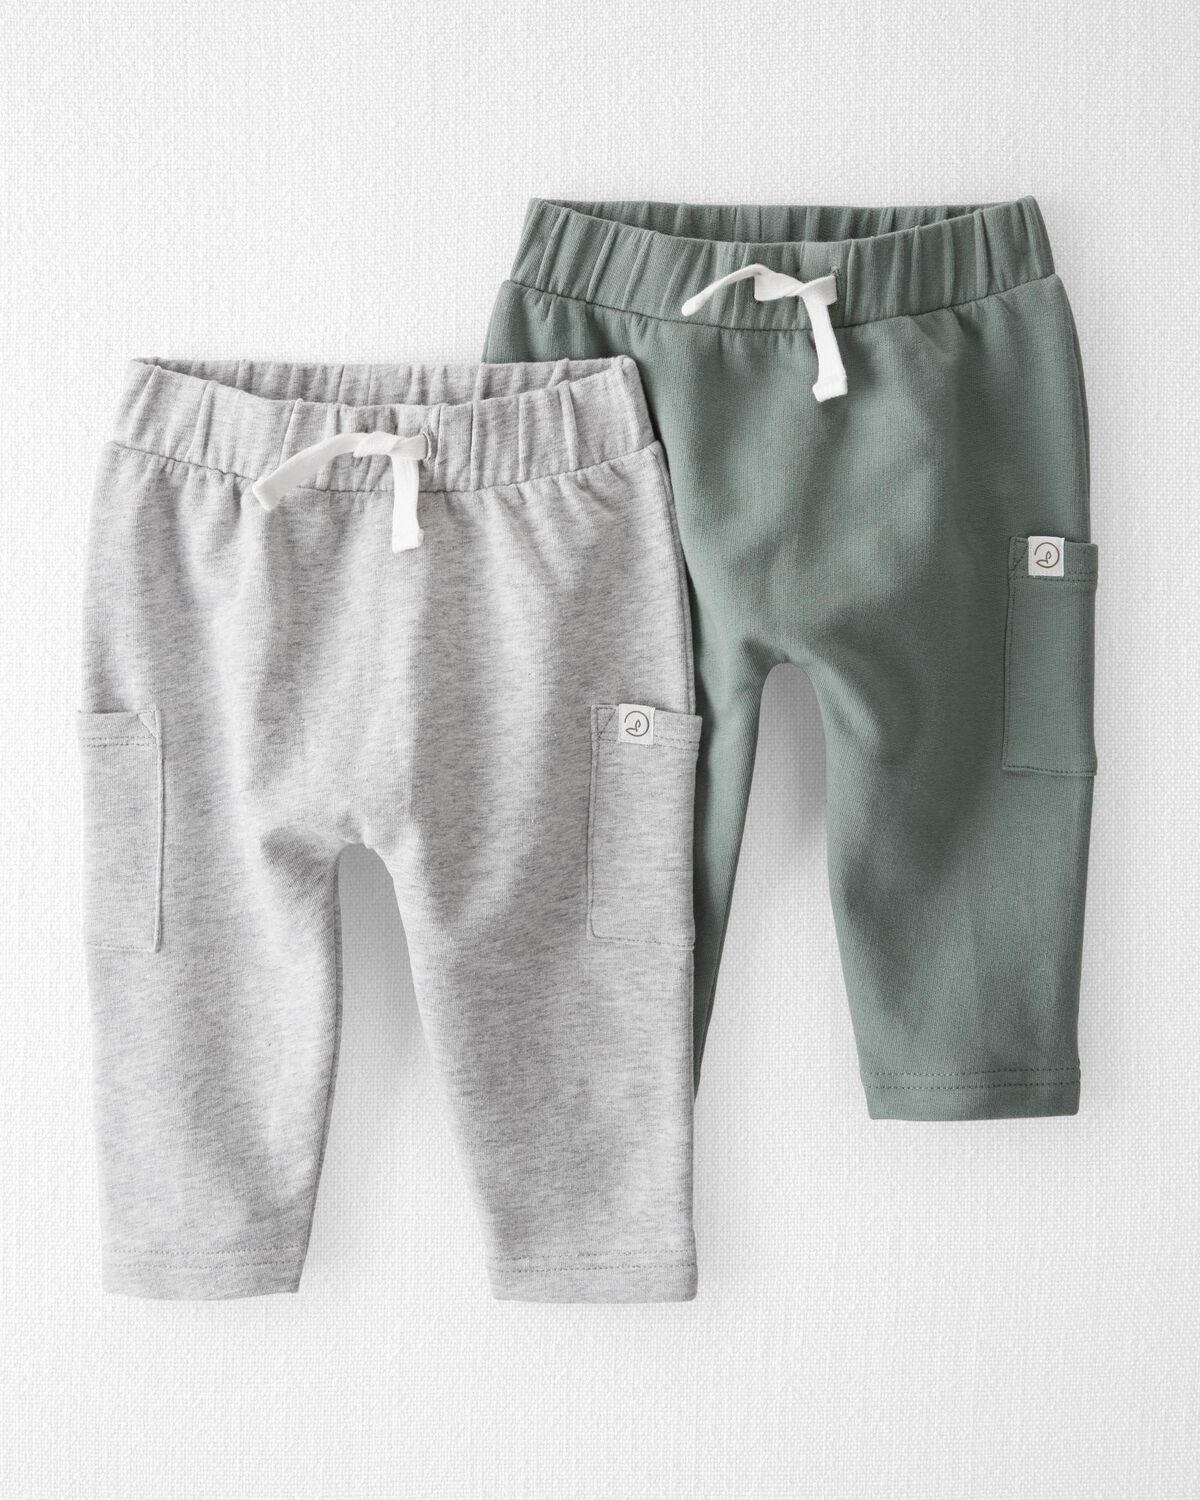 Boys Soft Cotton Athletic Pants - UPF 50+